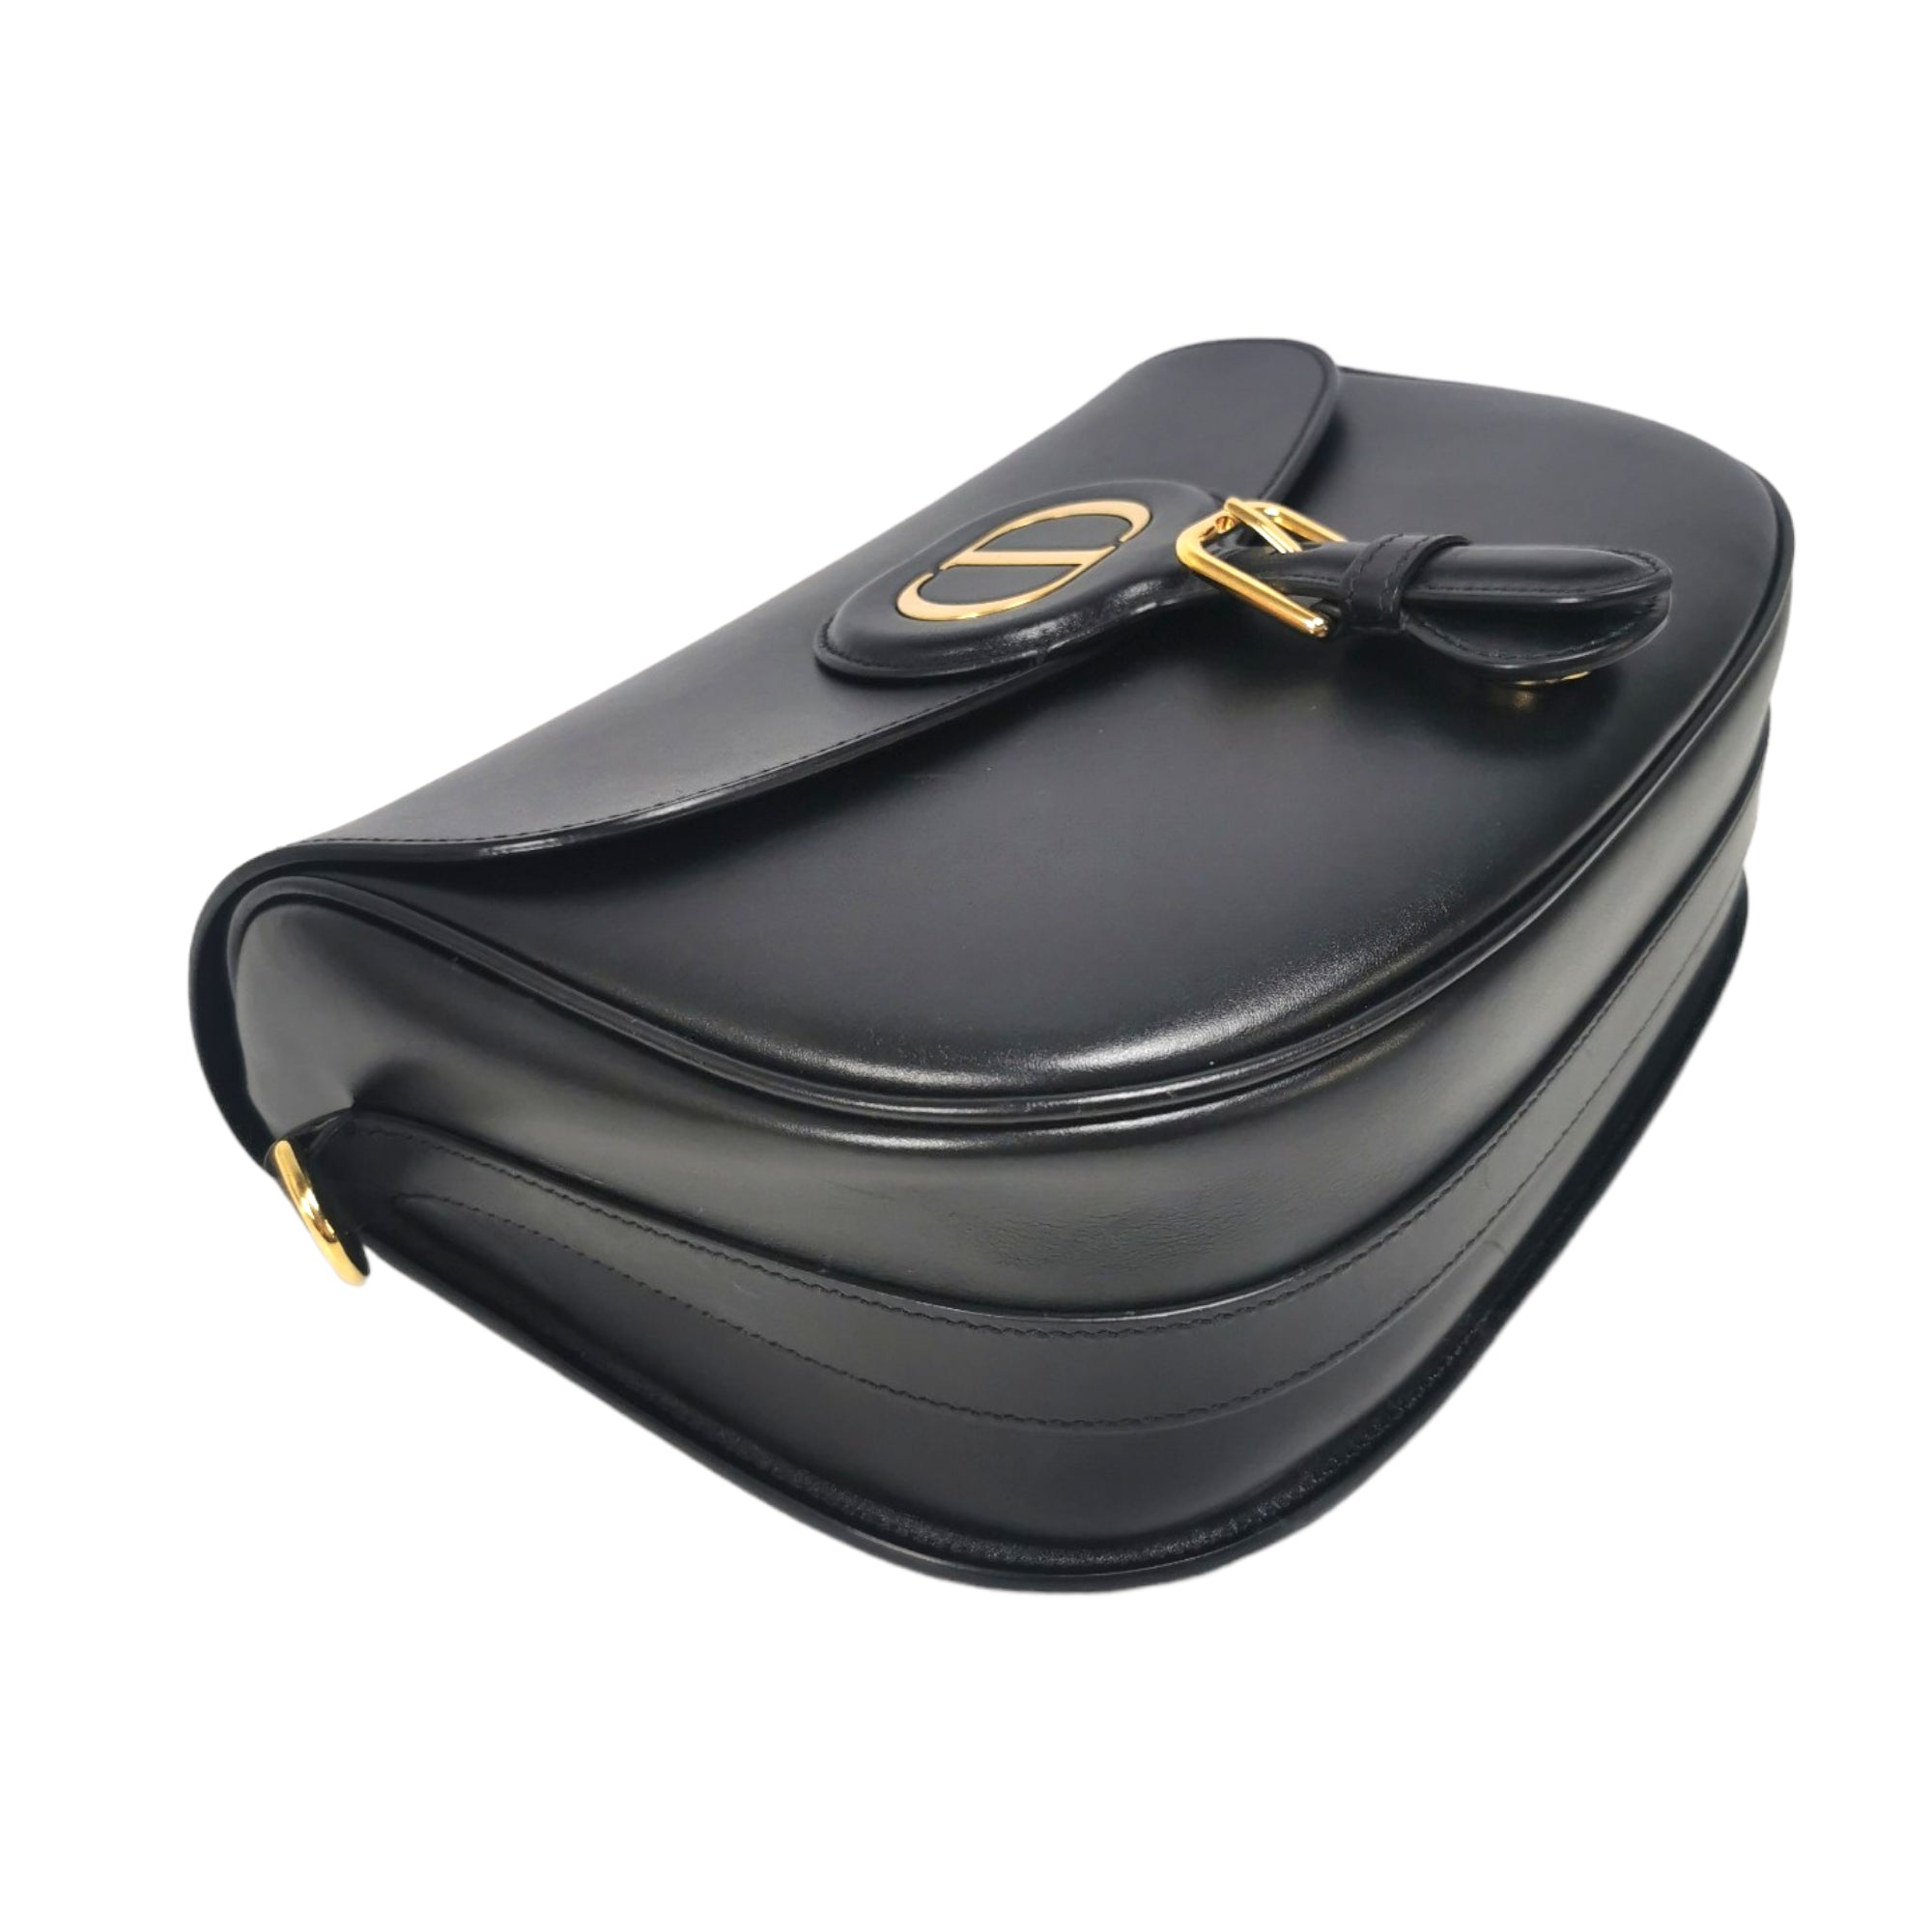 Small Dior Bobby Bag Black Box Calfskin, DIOR